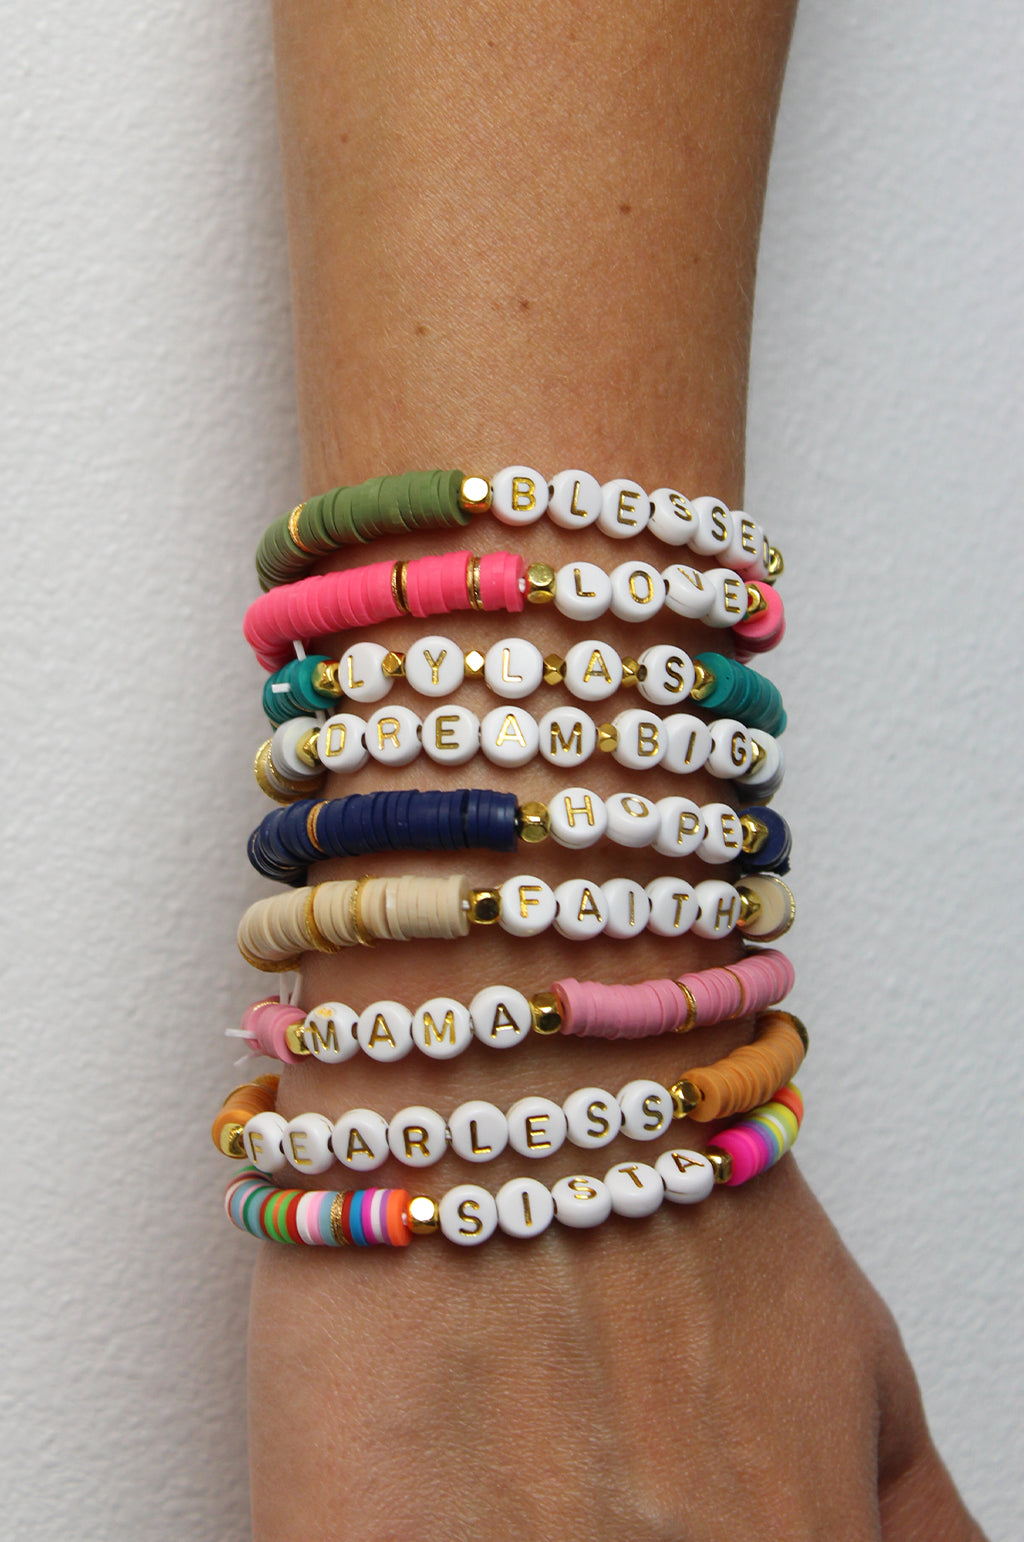 ✰𝚎𝚍𝚒𝚝𝚎𝚍 𝚋𝚢 𝚊𝚗𝚗𝚊 𝚠/ 𝚌𝚘𝚕𝚘𝚞𝚛𝚝𝚘𝚗𝚎✰ | Preppy bracelets,  Preppy jewelry, Bracelet designs